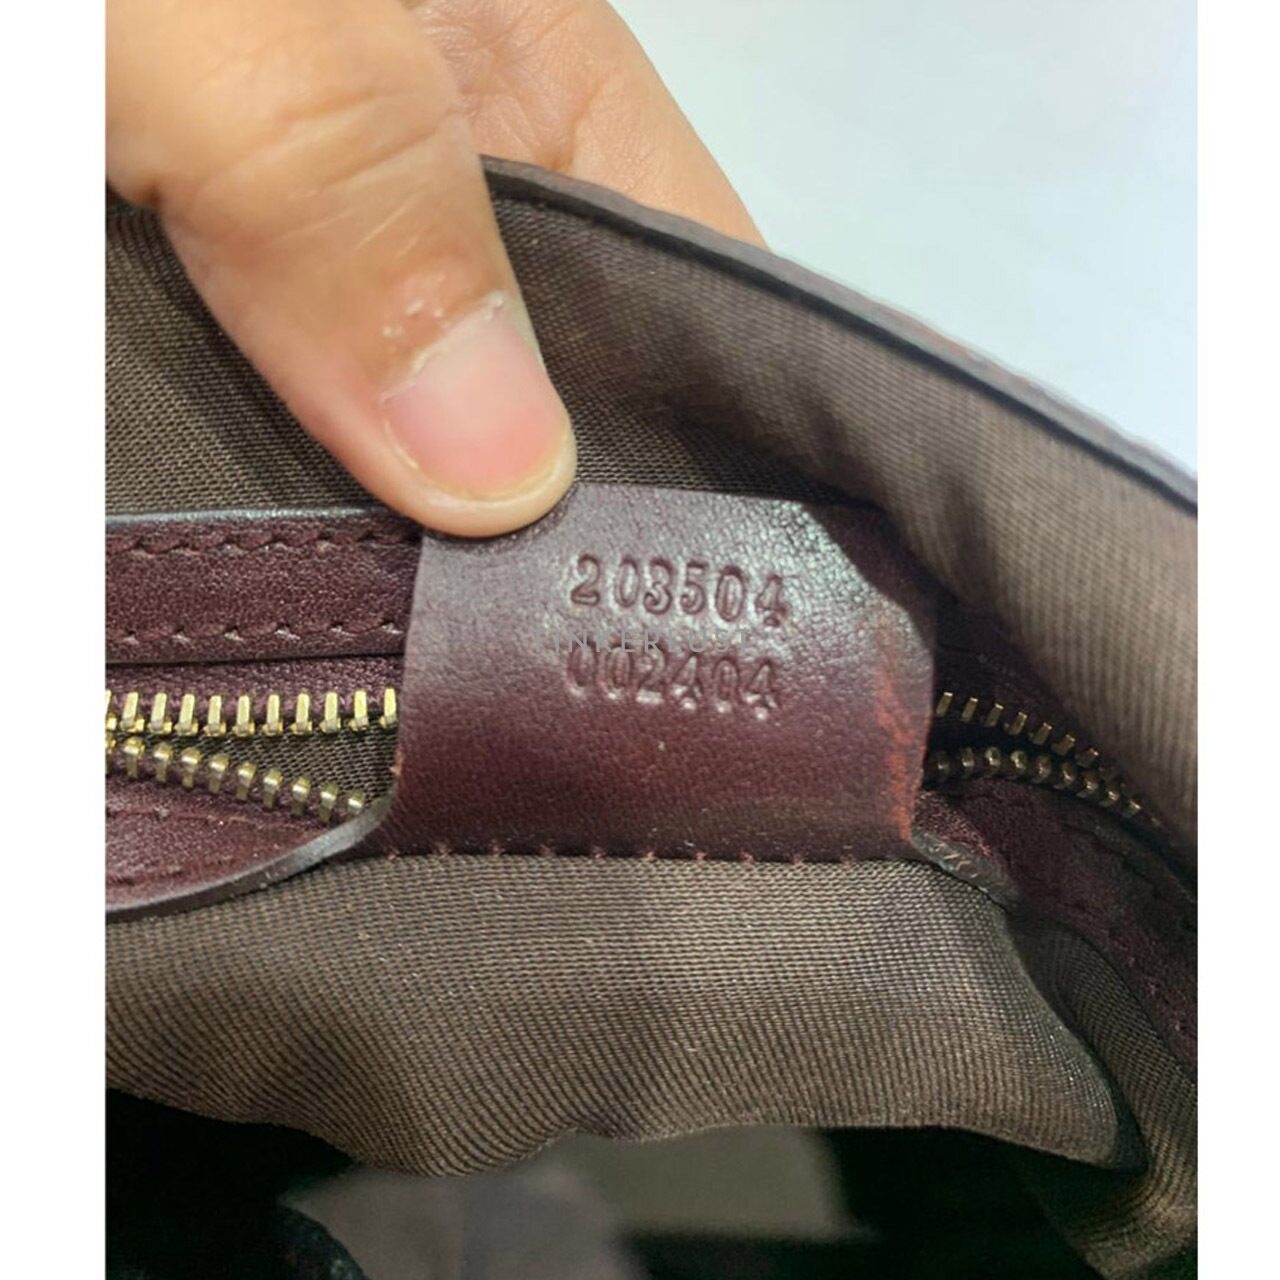 Gucci GG Charlotte Hobo Canvas Leather Brown Shoulder Bag